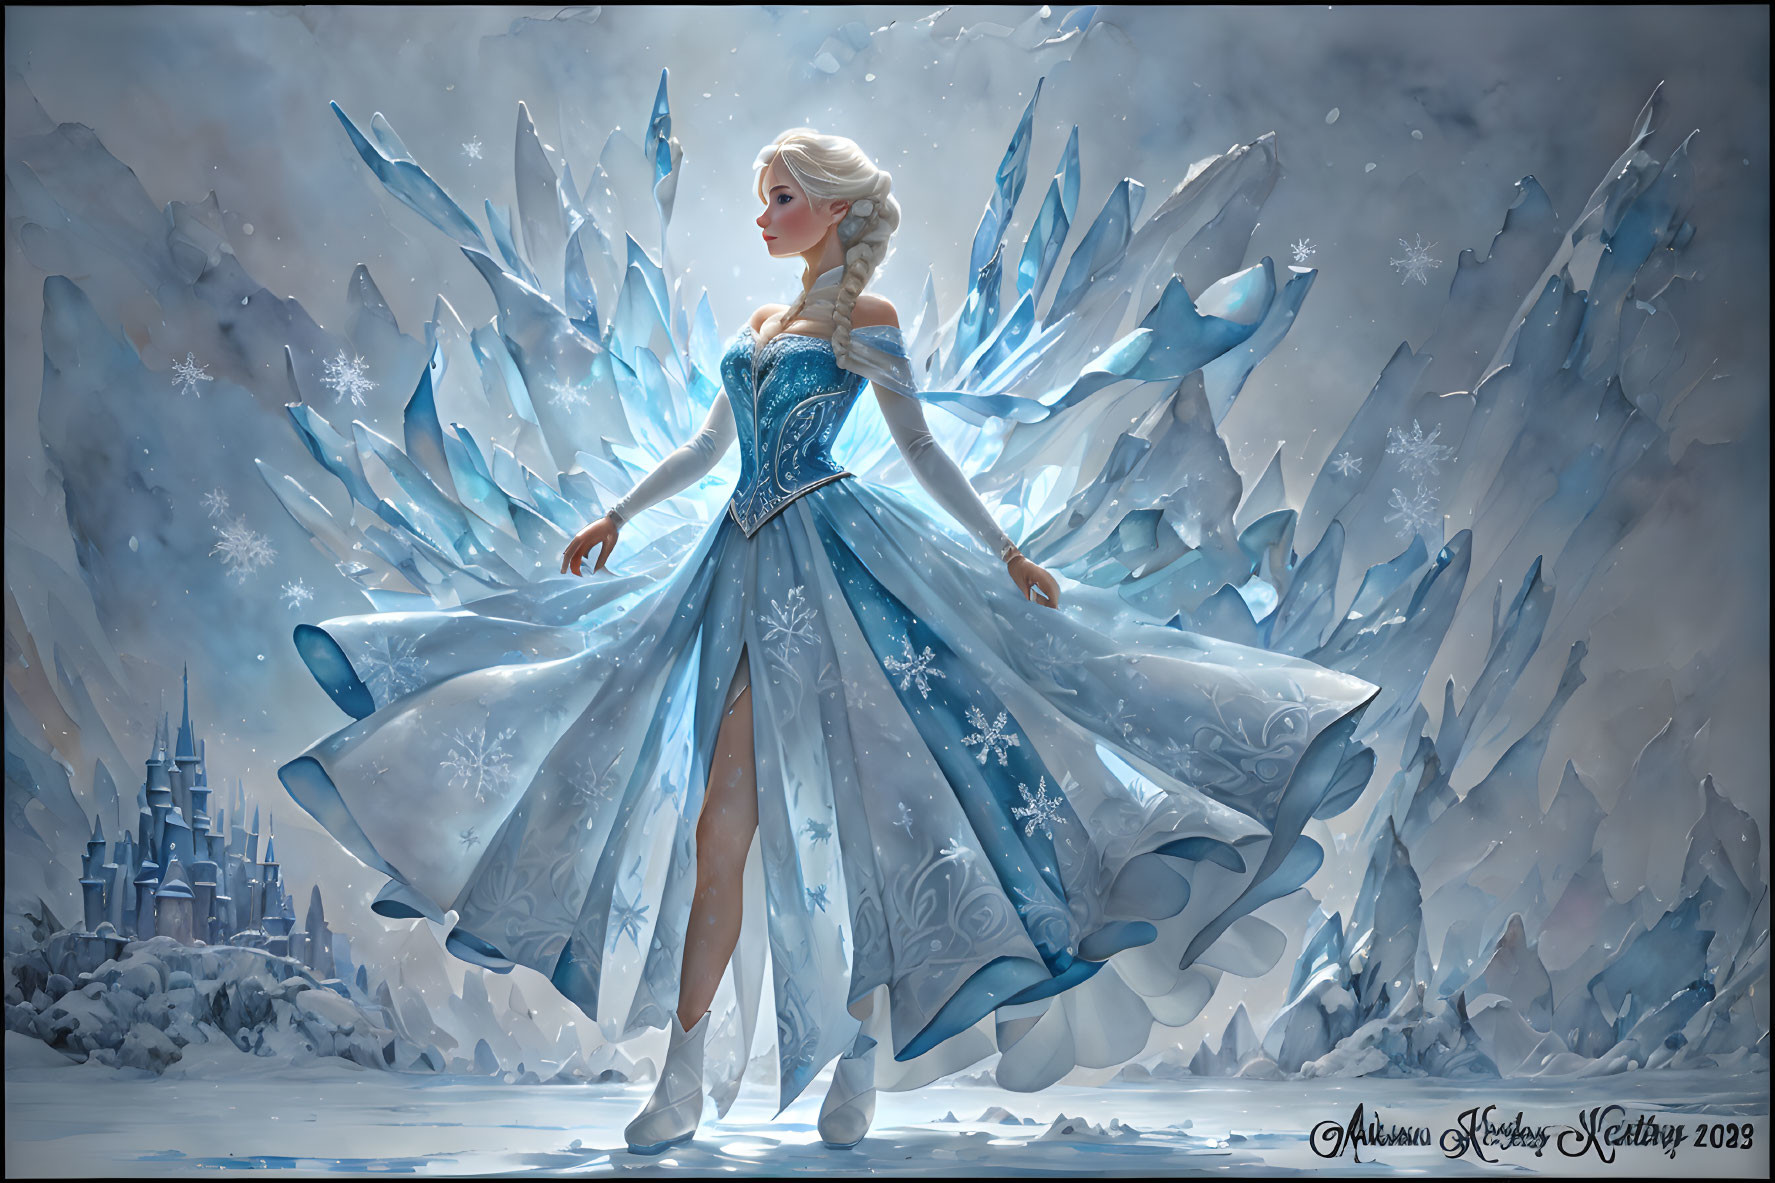 Ethereal ice-themed woman in frozen wing dress in snowy landscape